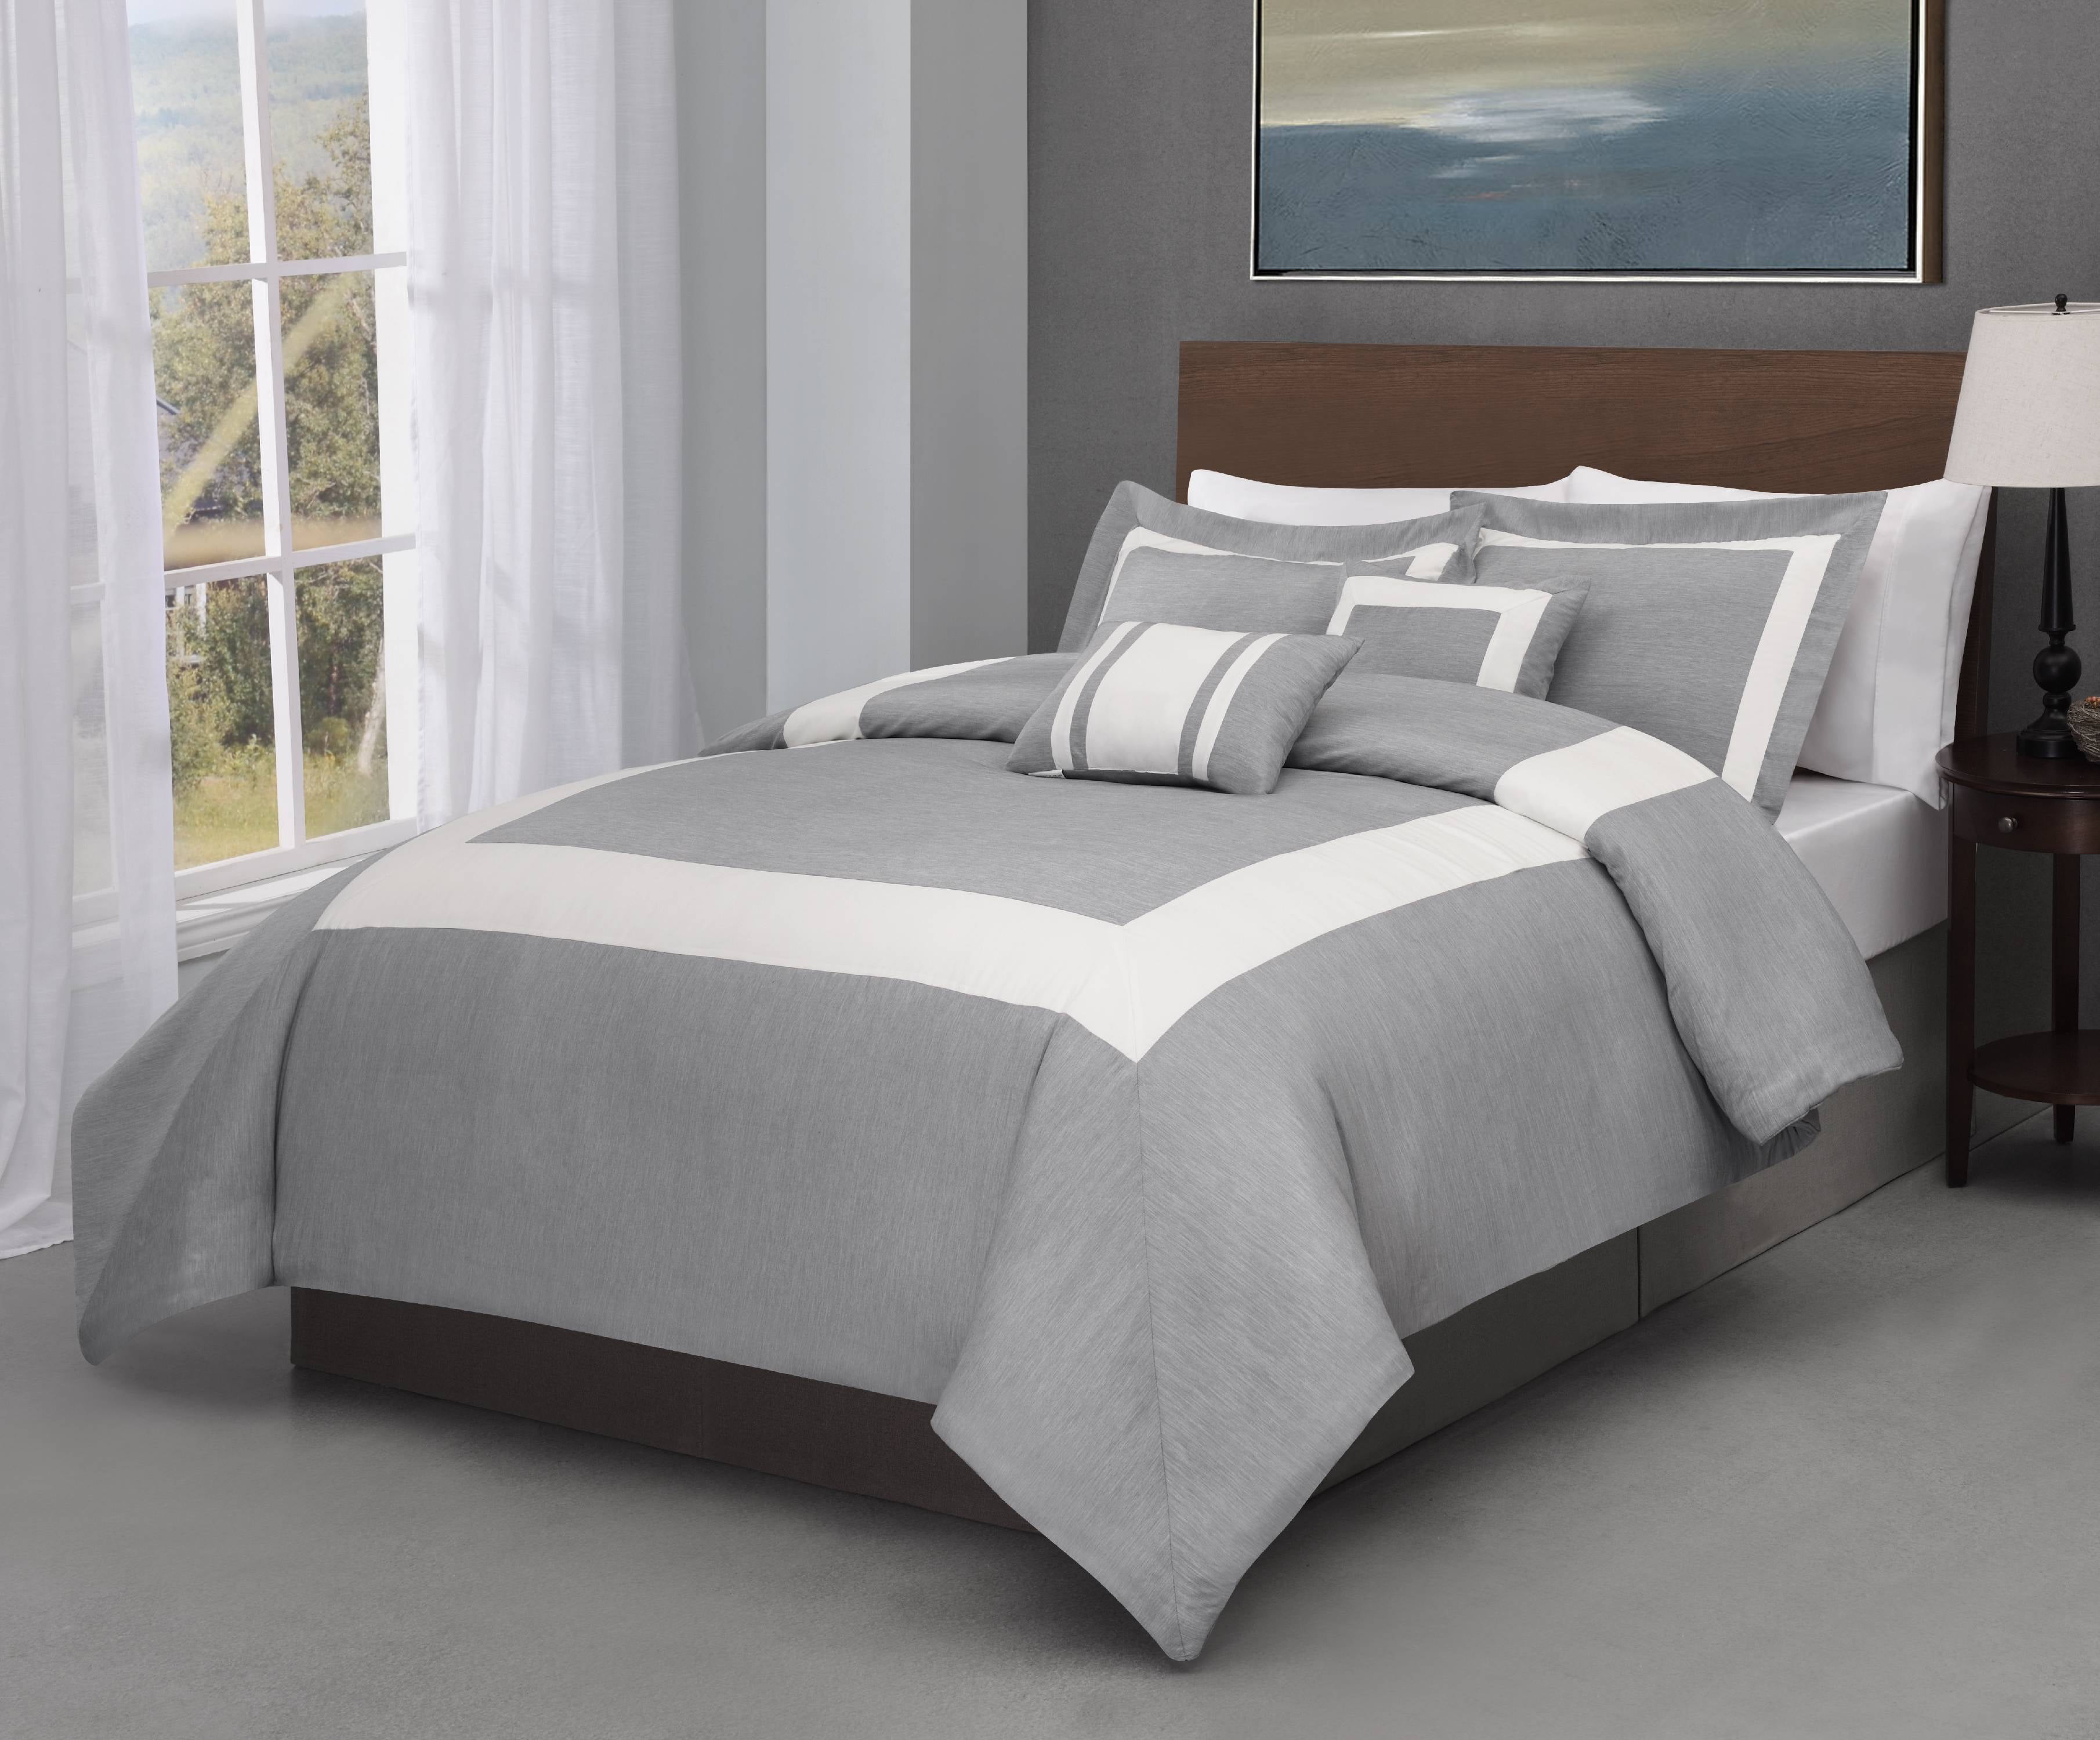 S1606-4Q Cozy Beddings Light Forte Queen Size 5pc Comforter Set Grey 5 Piece BH&B International Inc 